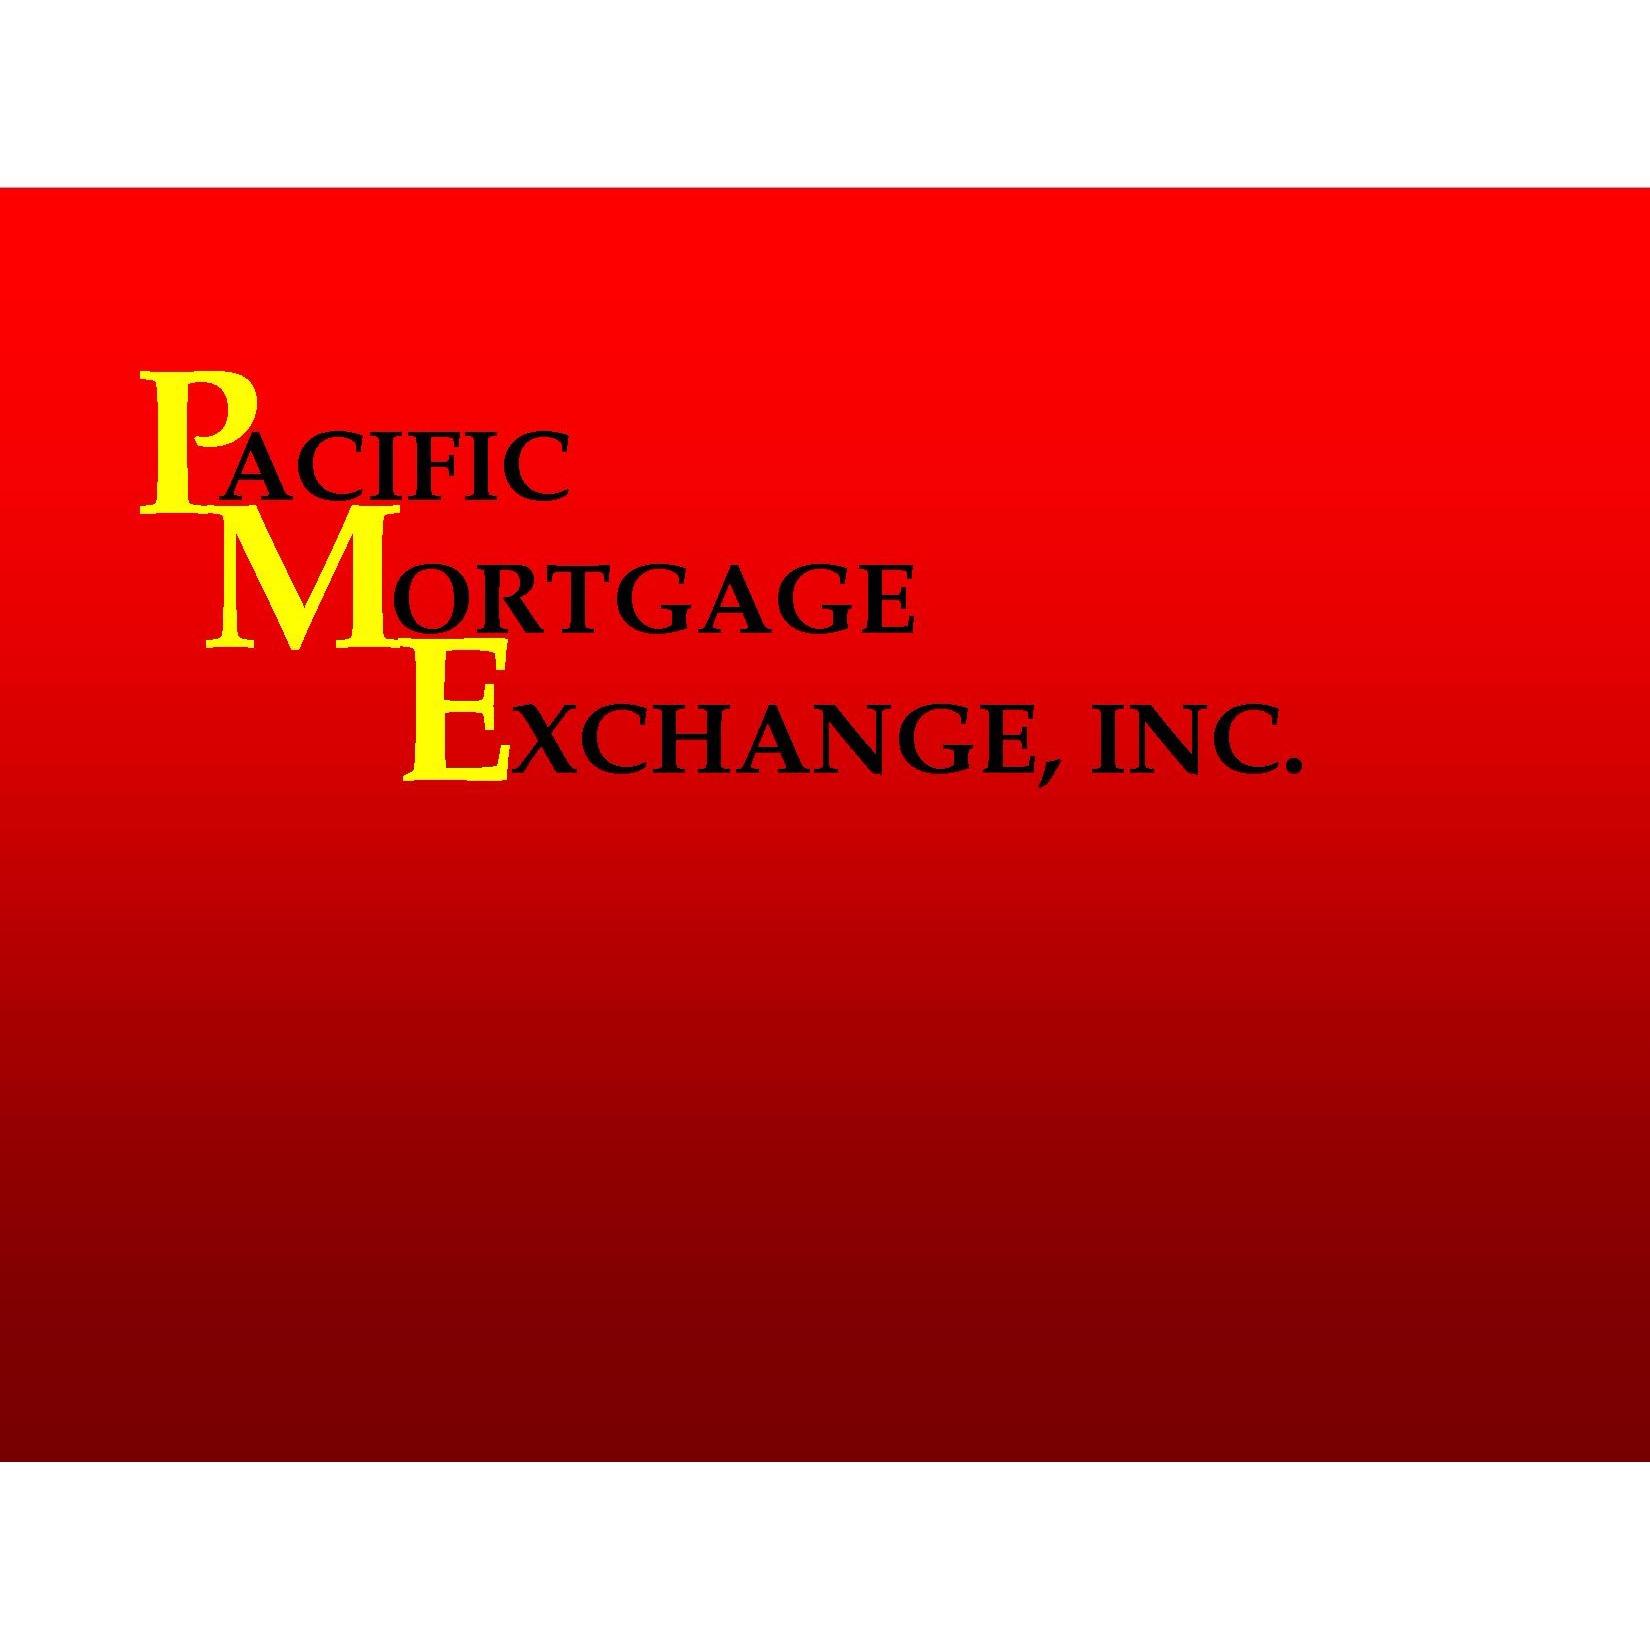 Pacific Mortgage Exchange, Inc.